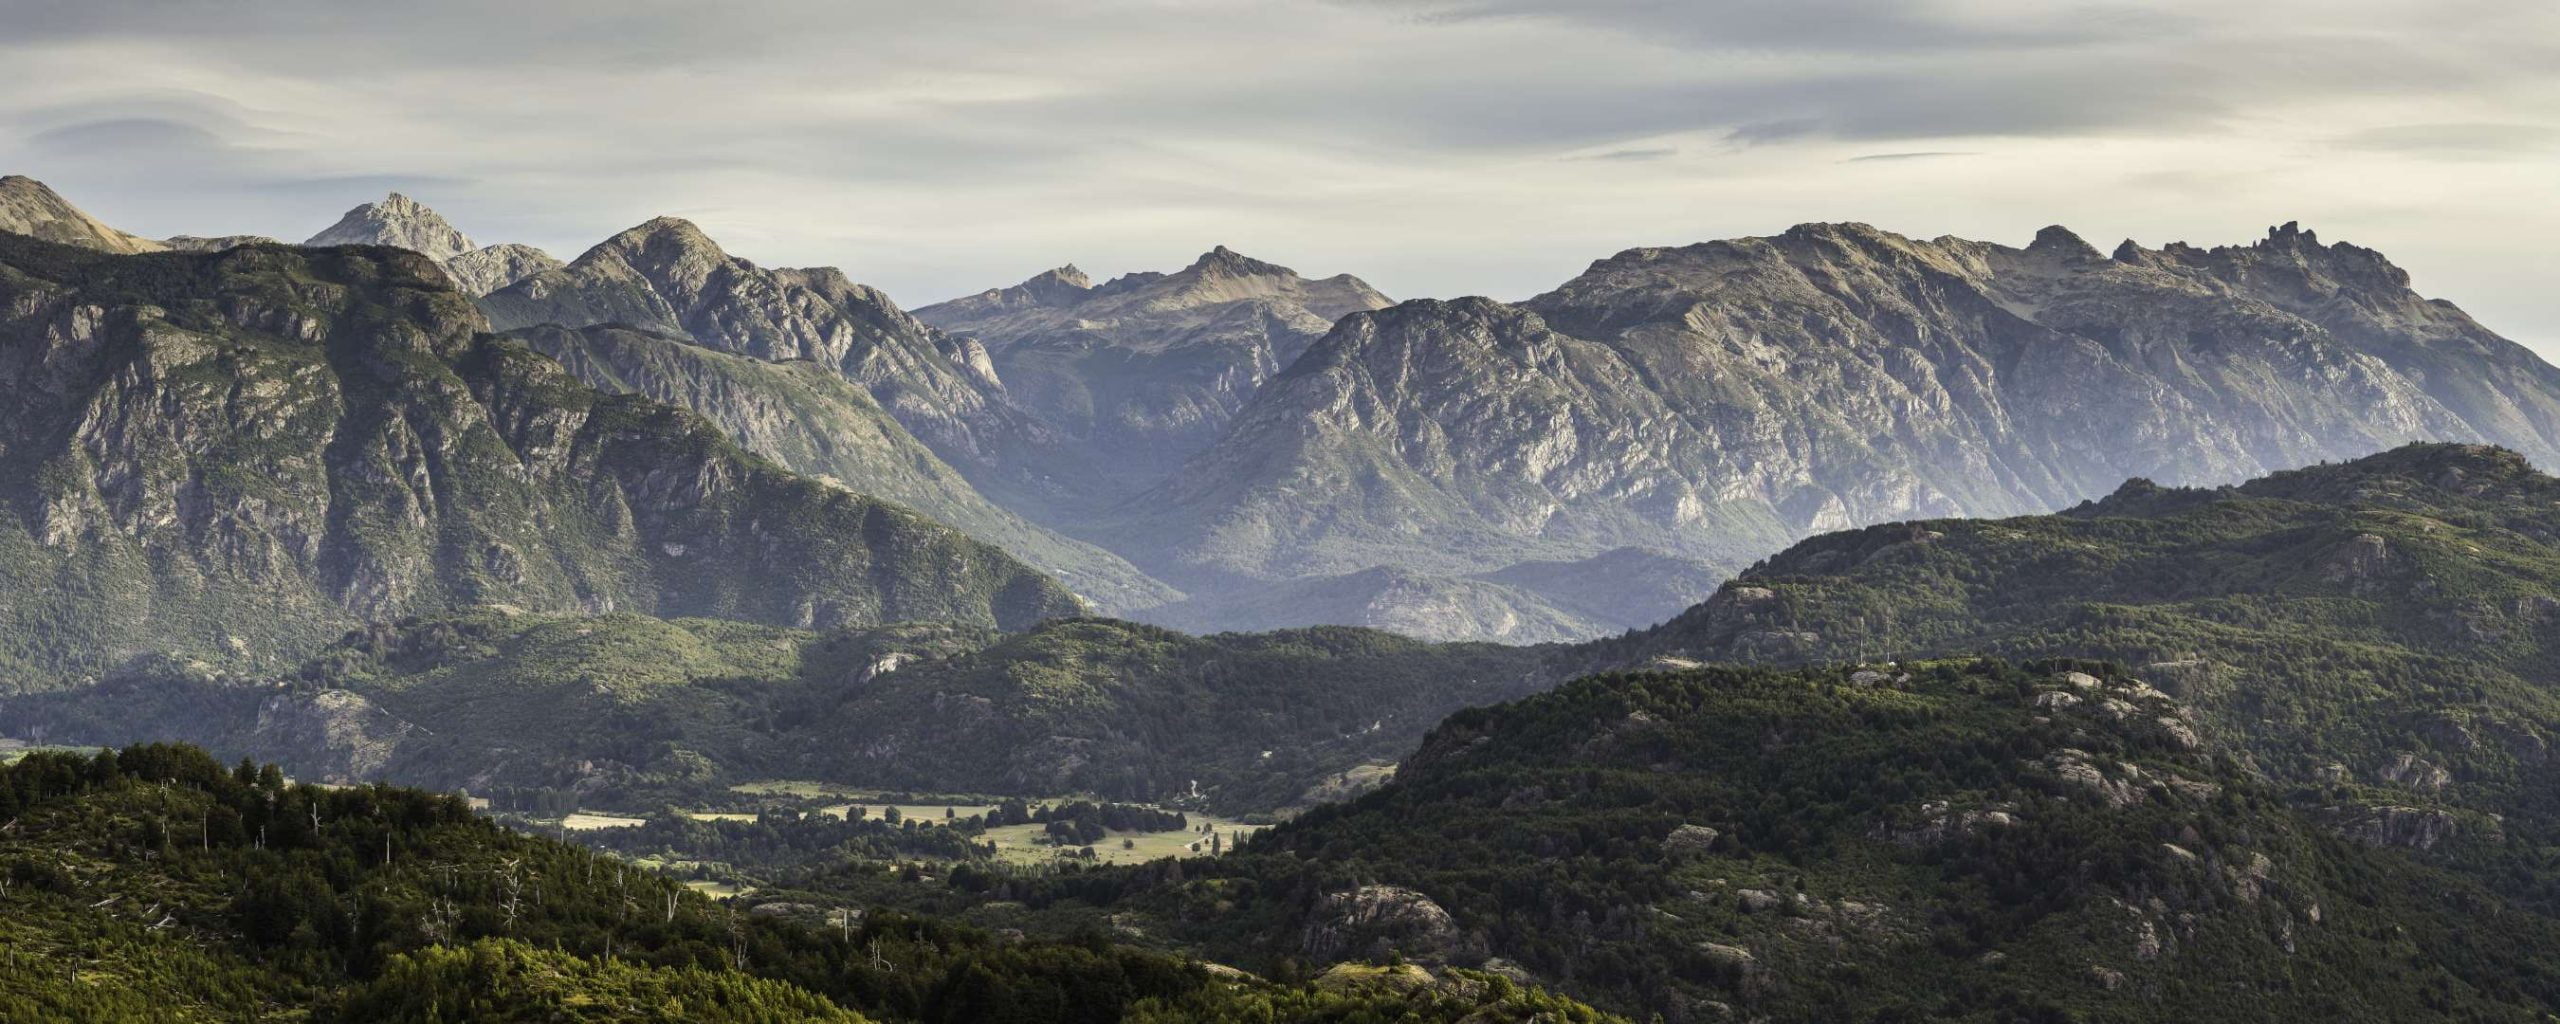 Panoramic mountain valley landscape,  Futaleufu, Los Lagos region, Chile